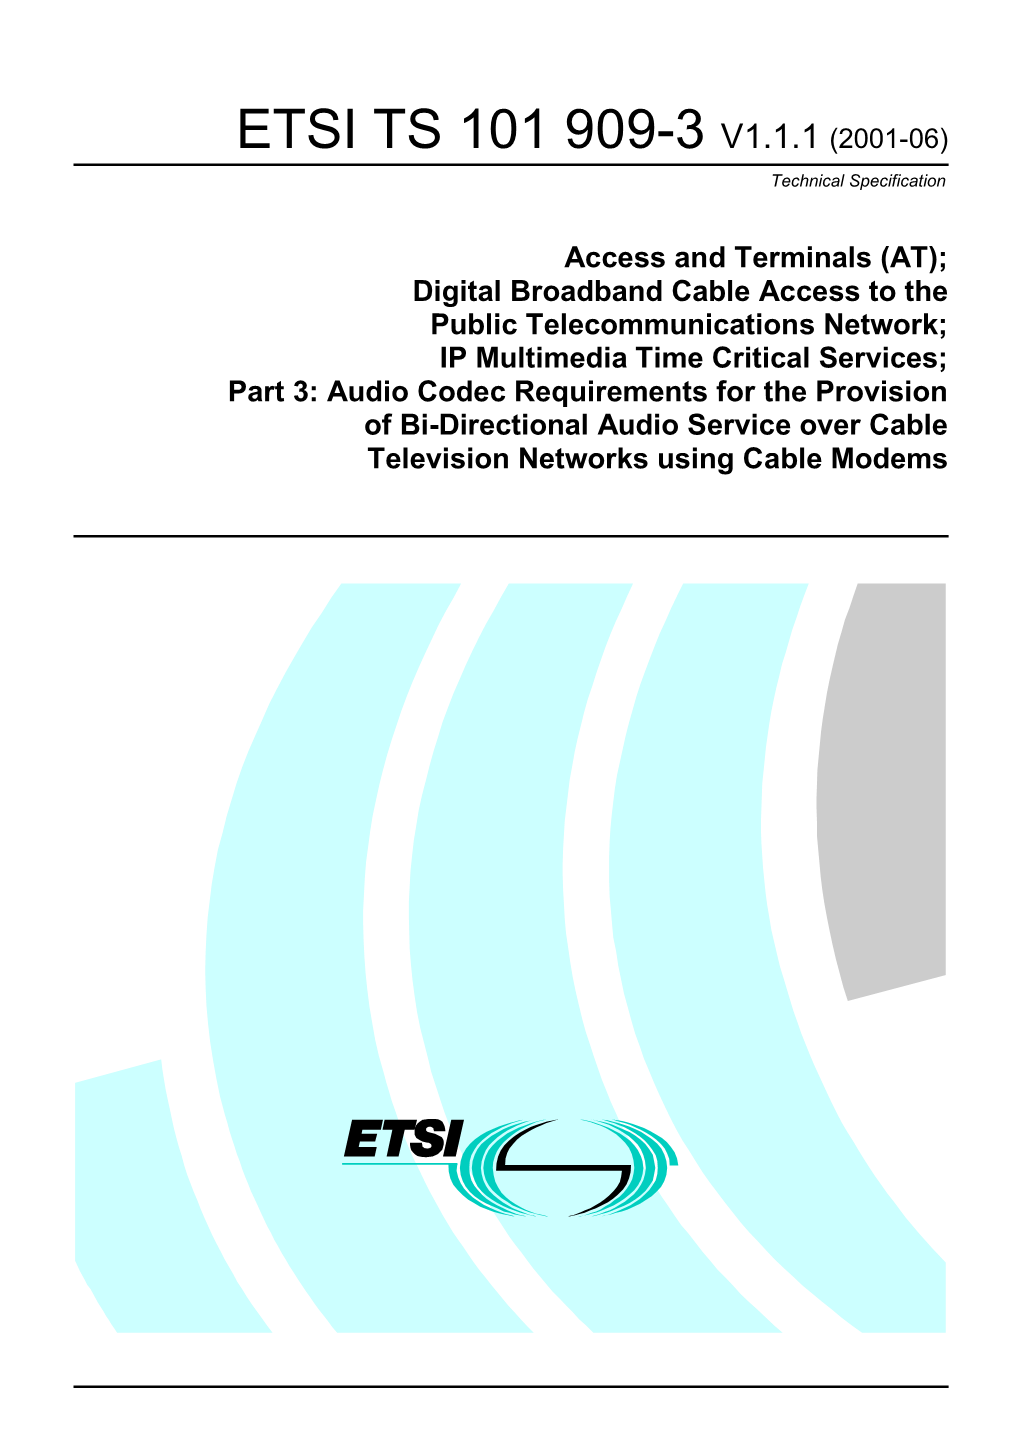 ETSI TS 101 909-3 V1.1.1 (2001-06) Technical Specification